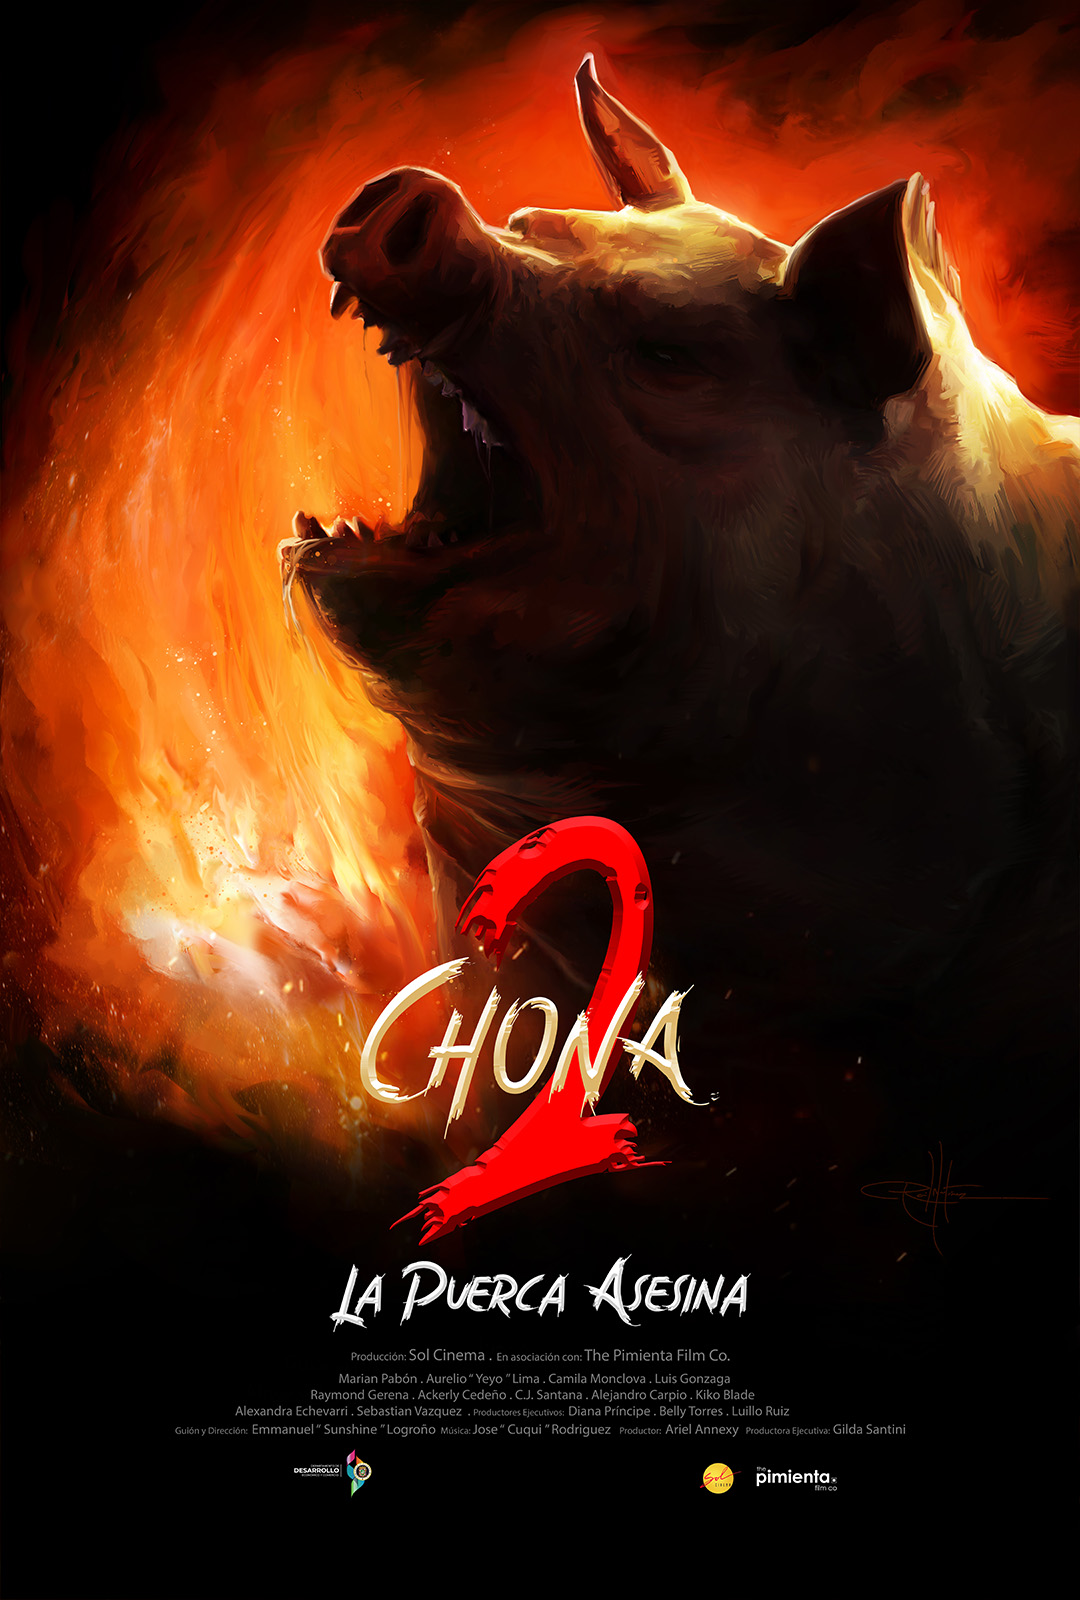 Movie Poster: Chona 2